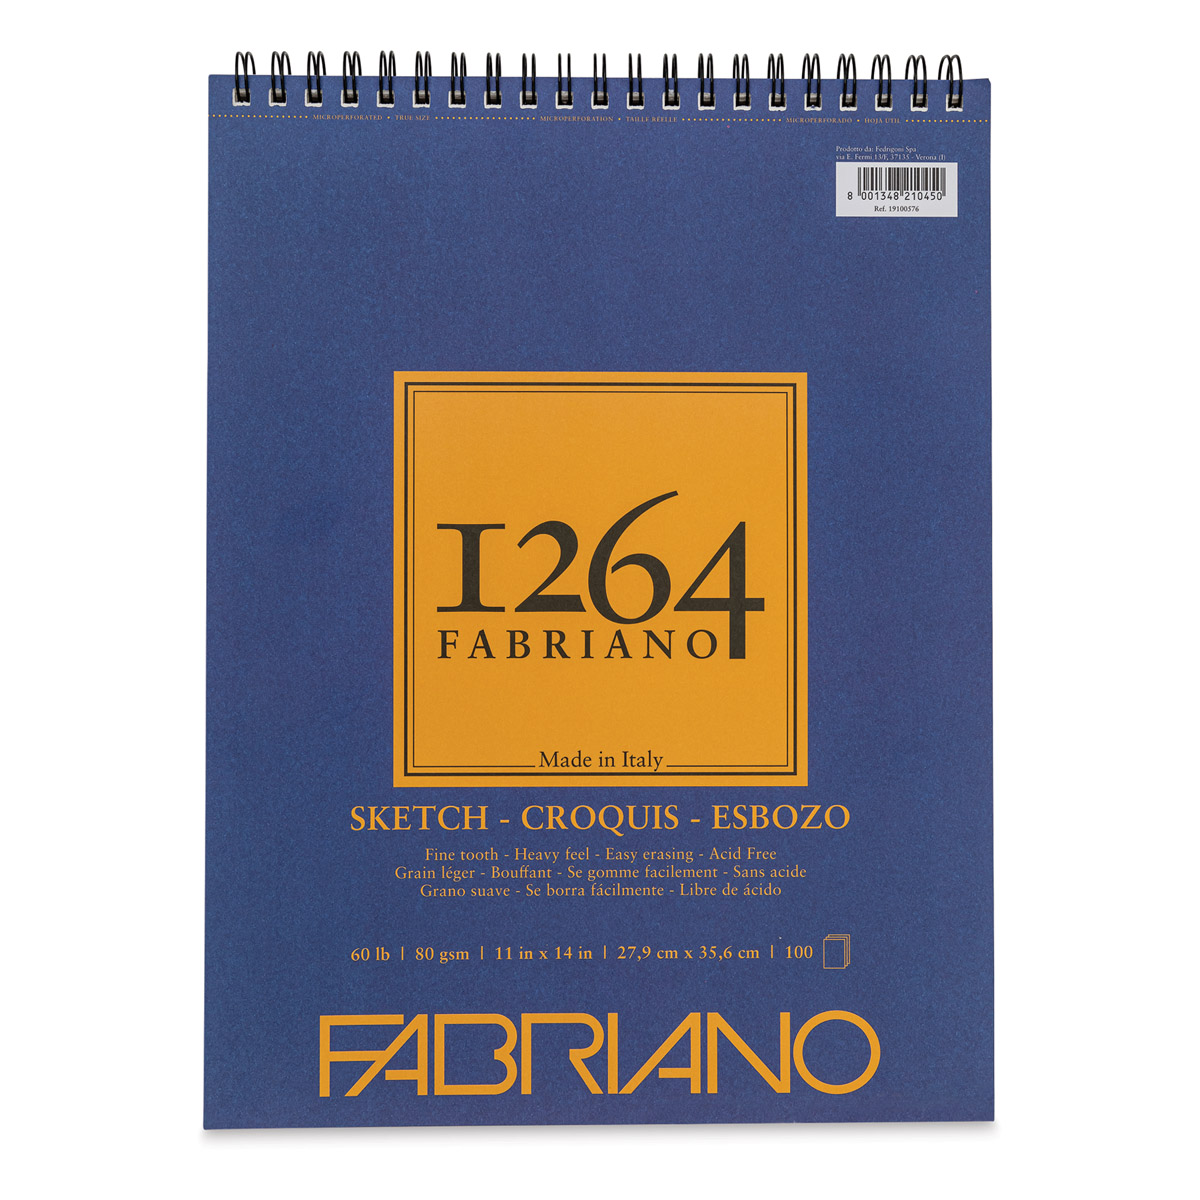 Fabriano 1264 Drawing Pad 5.5 x 8.5 - Philadelphia Museum Of Art